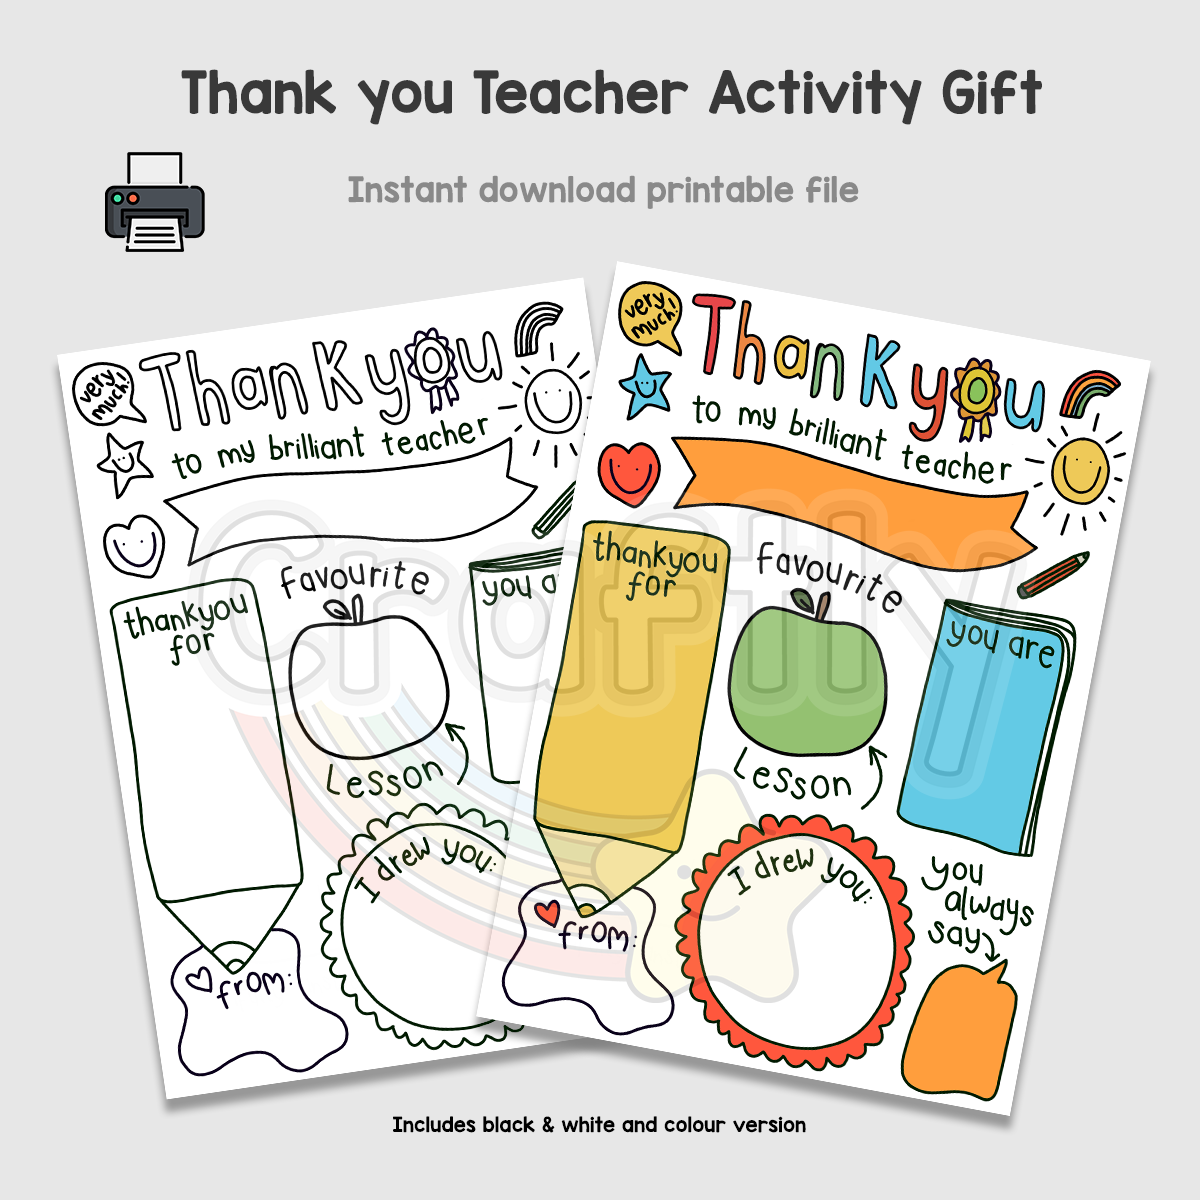 Thank you Teacher Gift Activity